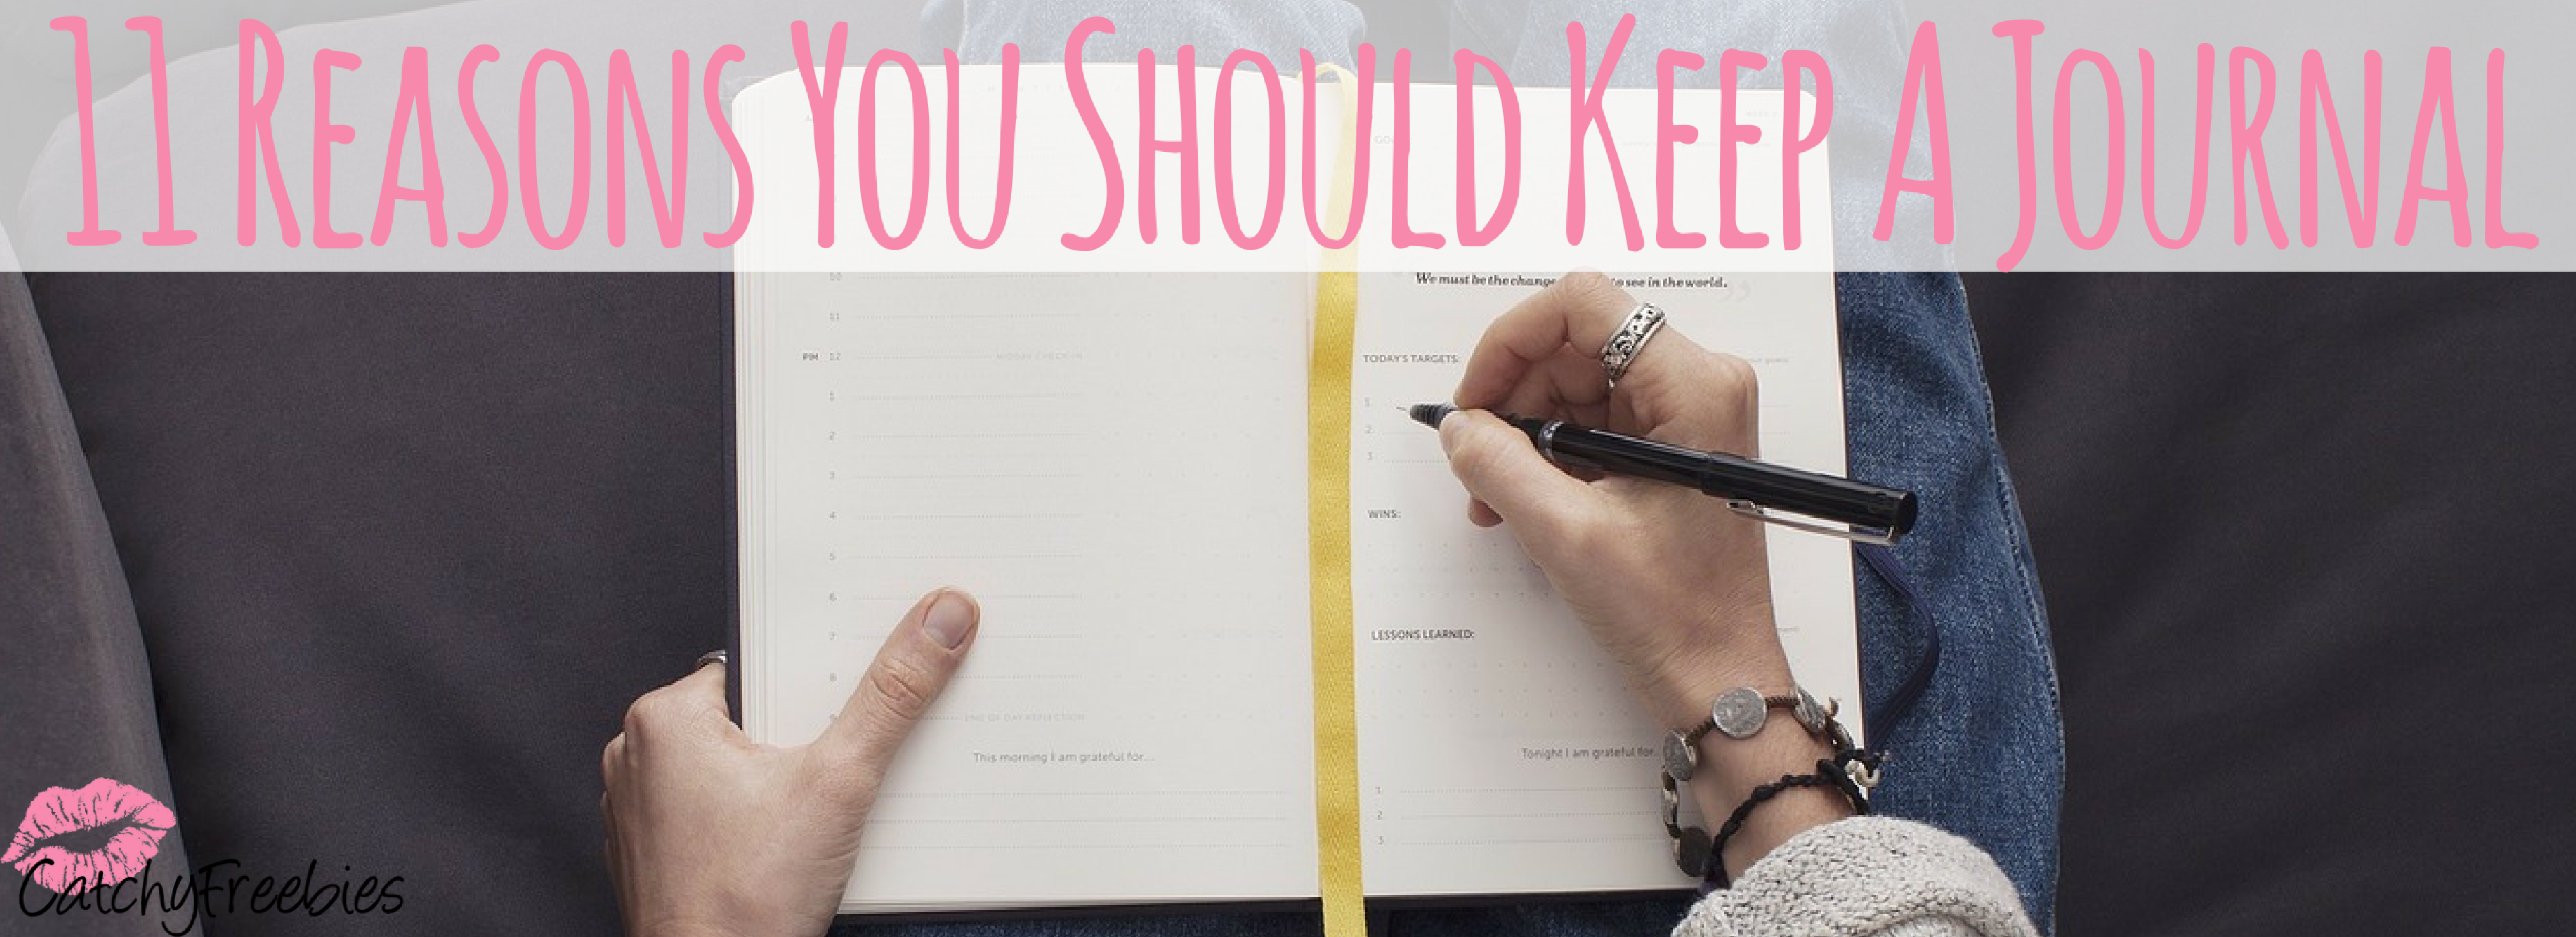 11 Reasons You Should Keep A Journal